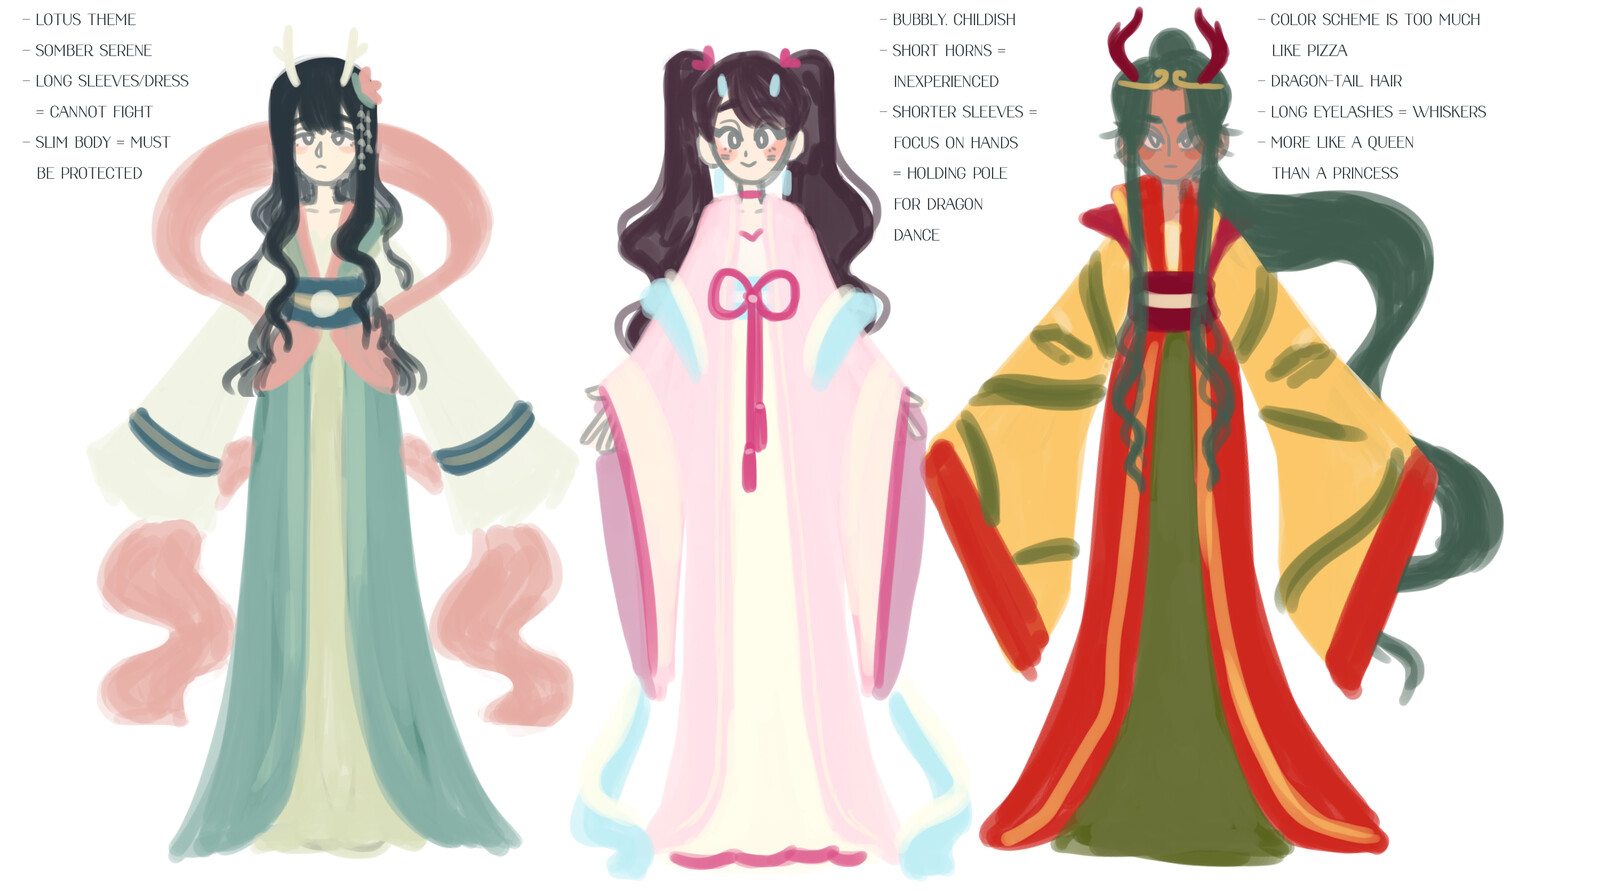 Design concepts following the theme of "Dragon Dancing Princess."